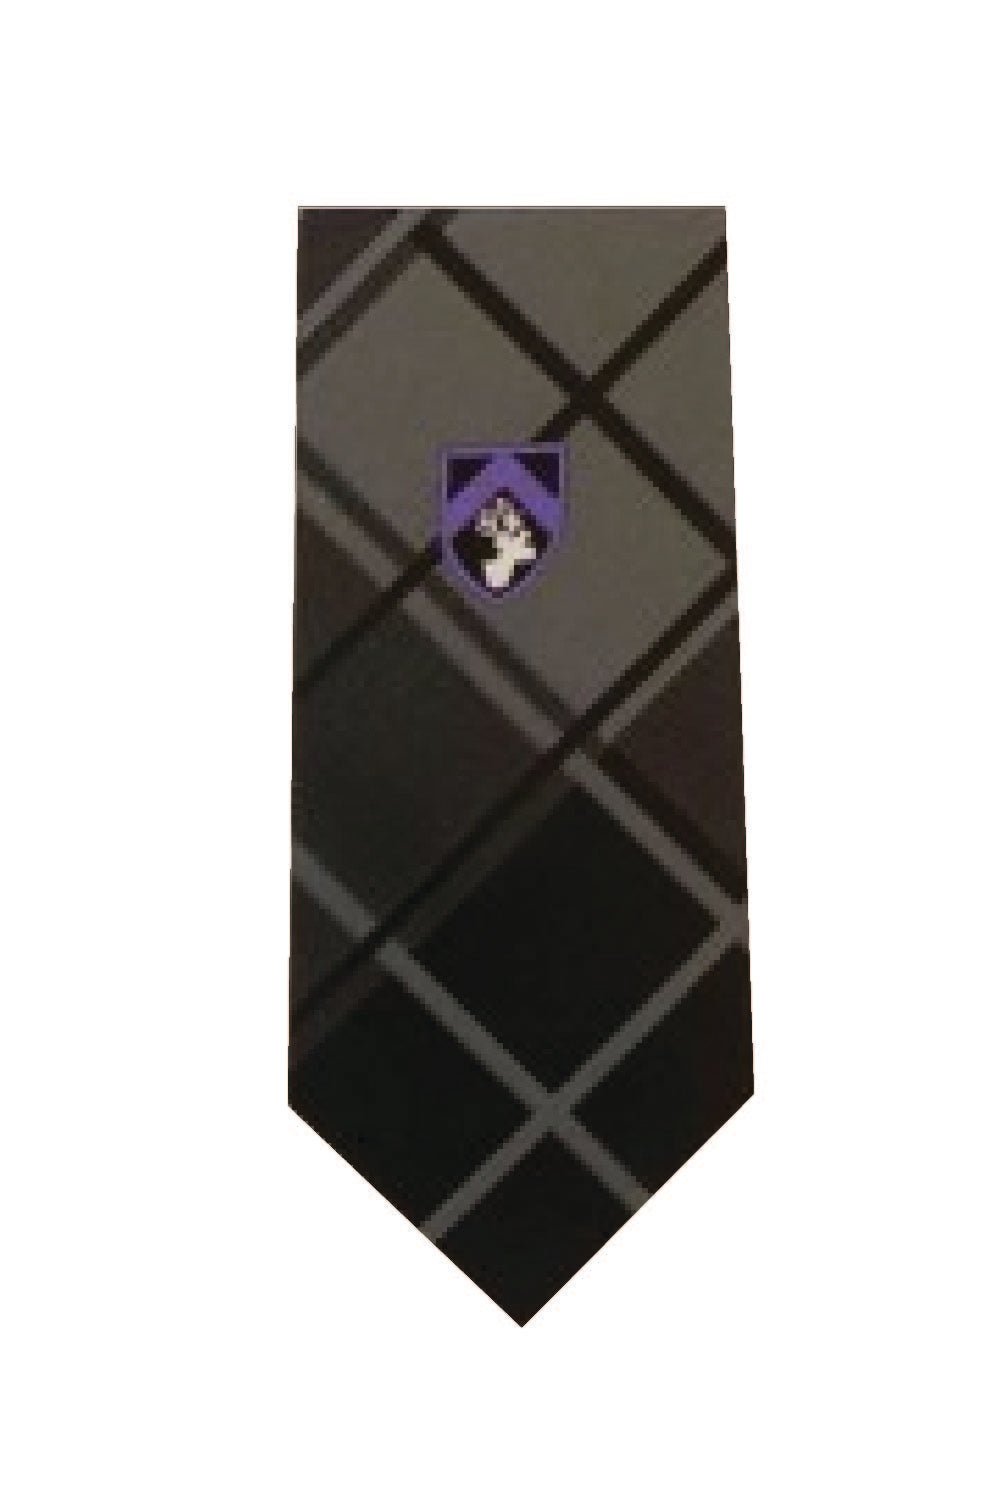 Gable Hall School Tie (Year 10 Sept 23) - Uniformwise Schoolwear